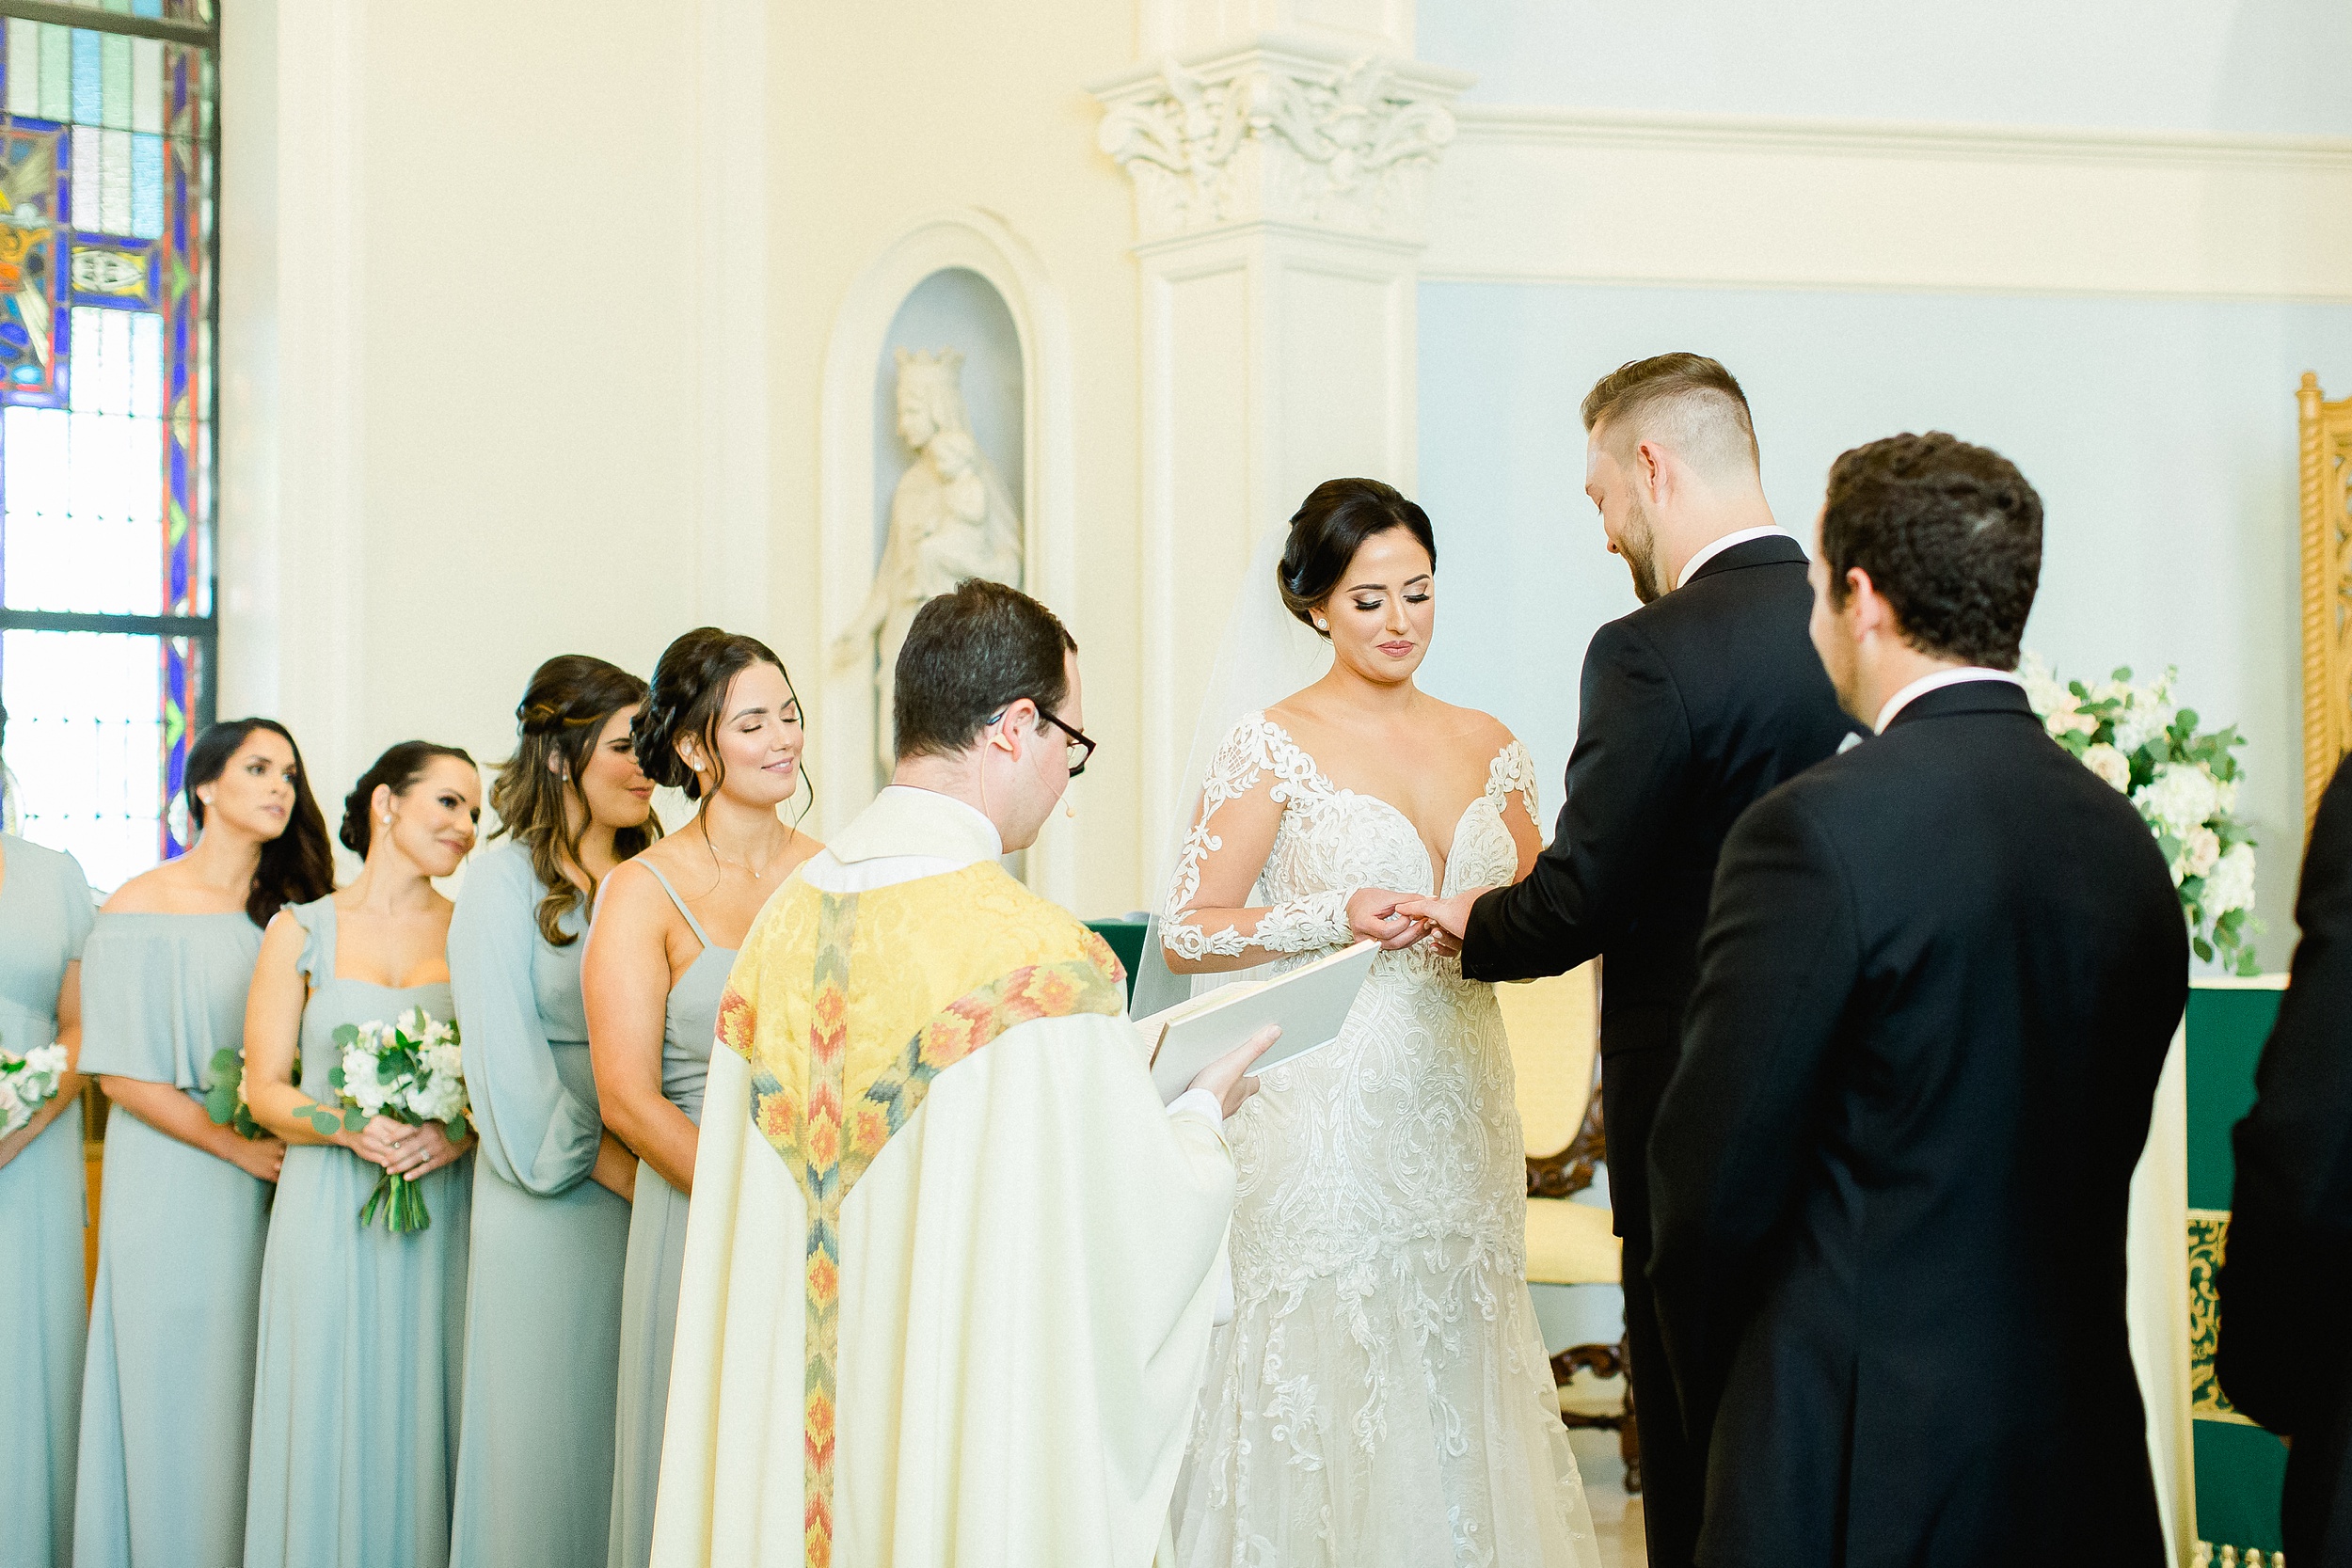 The Vault Wedding | © Ailyn La Torre Photography 2020